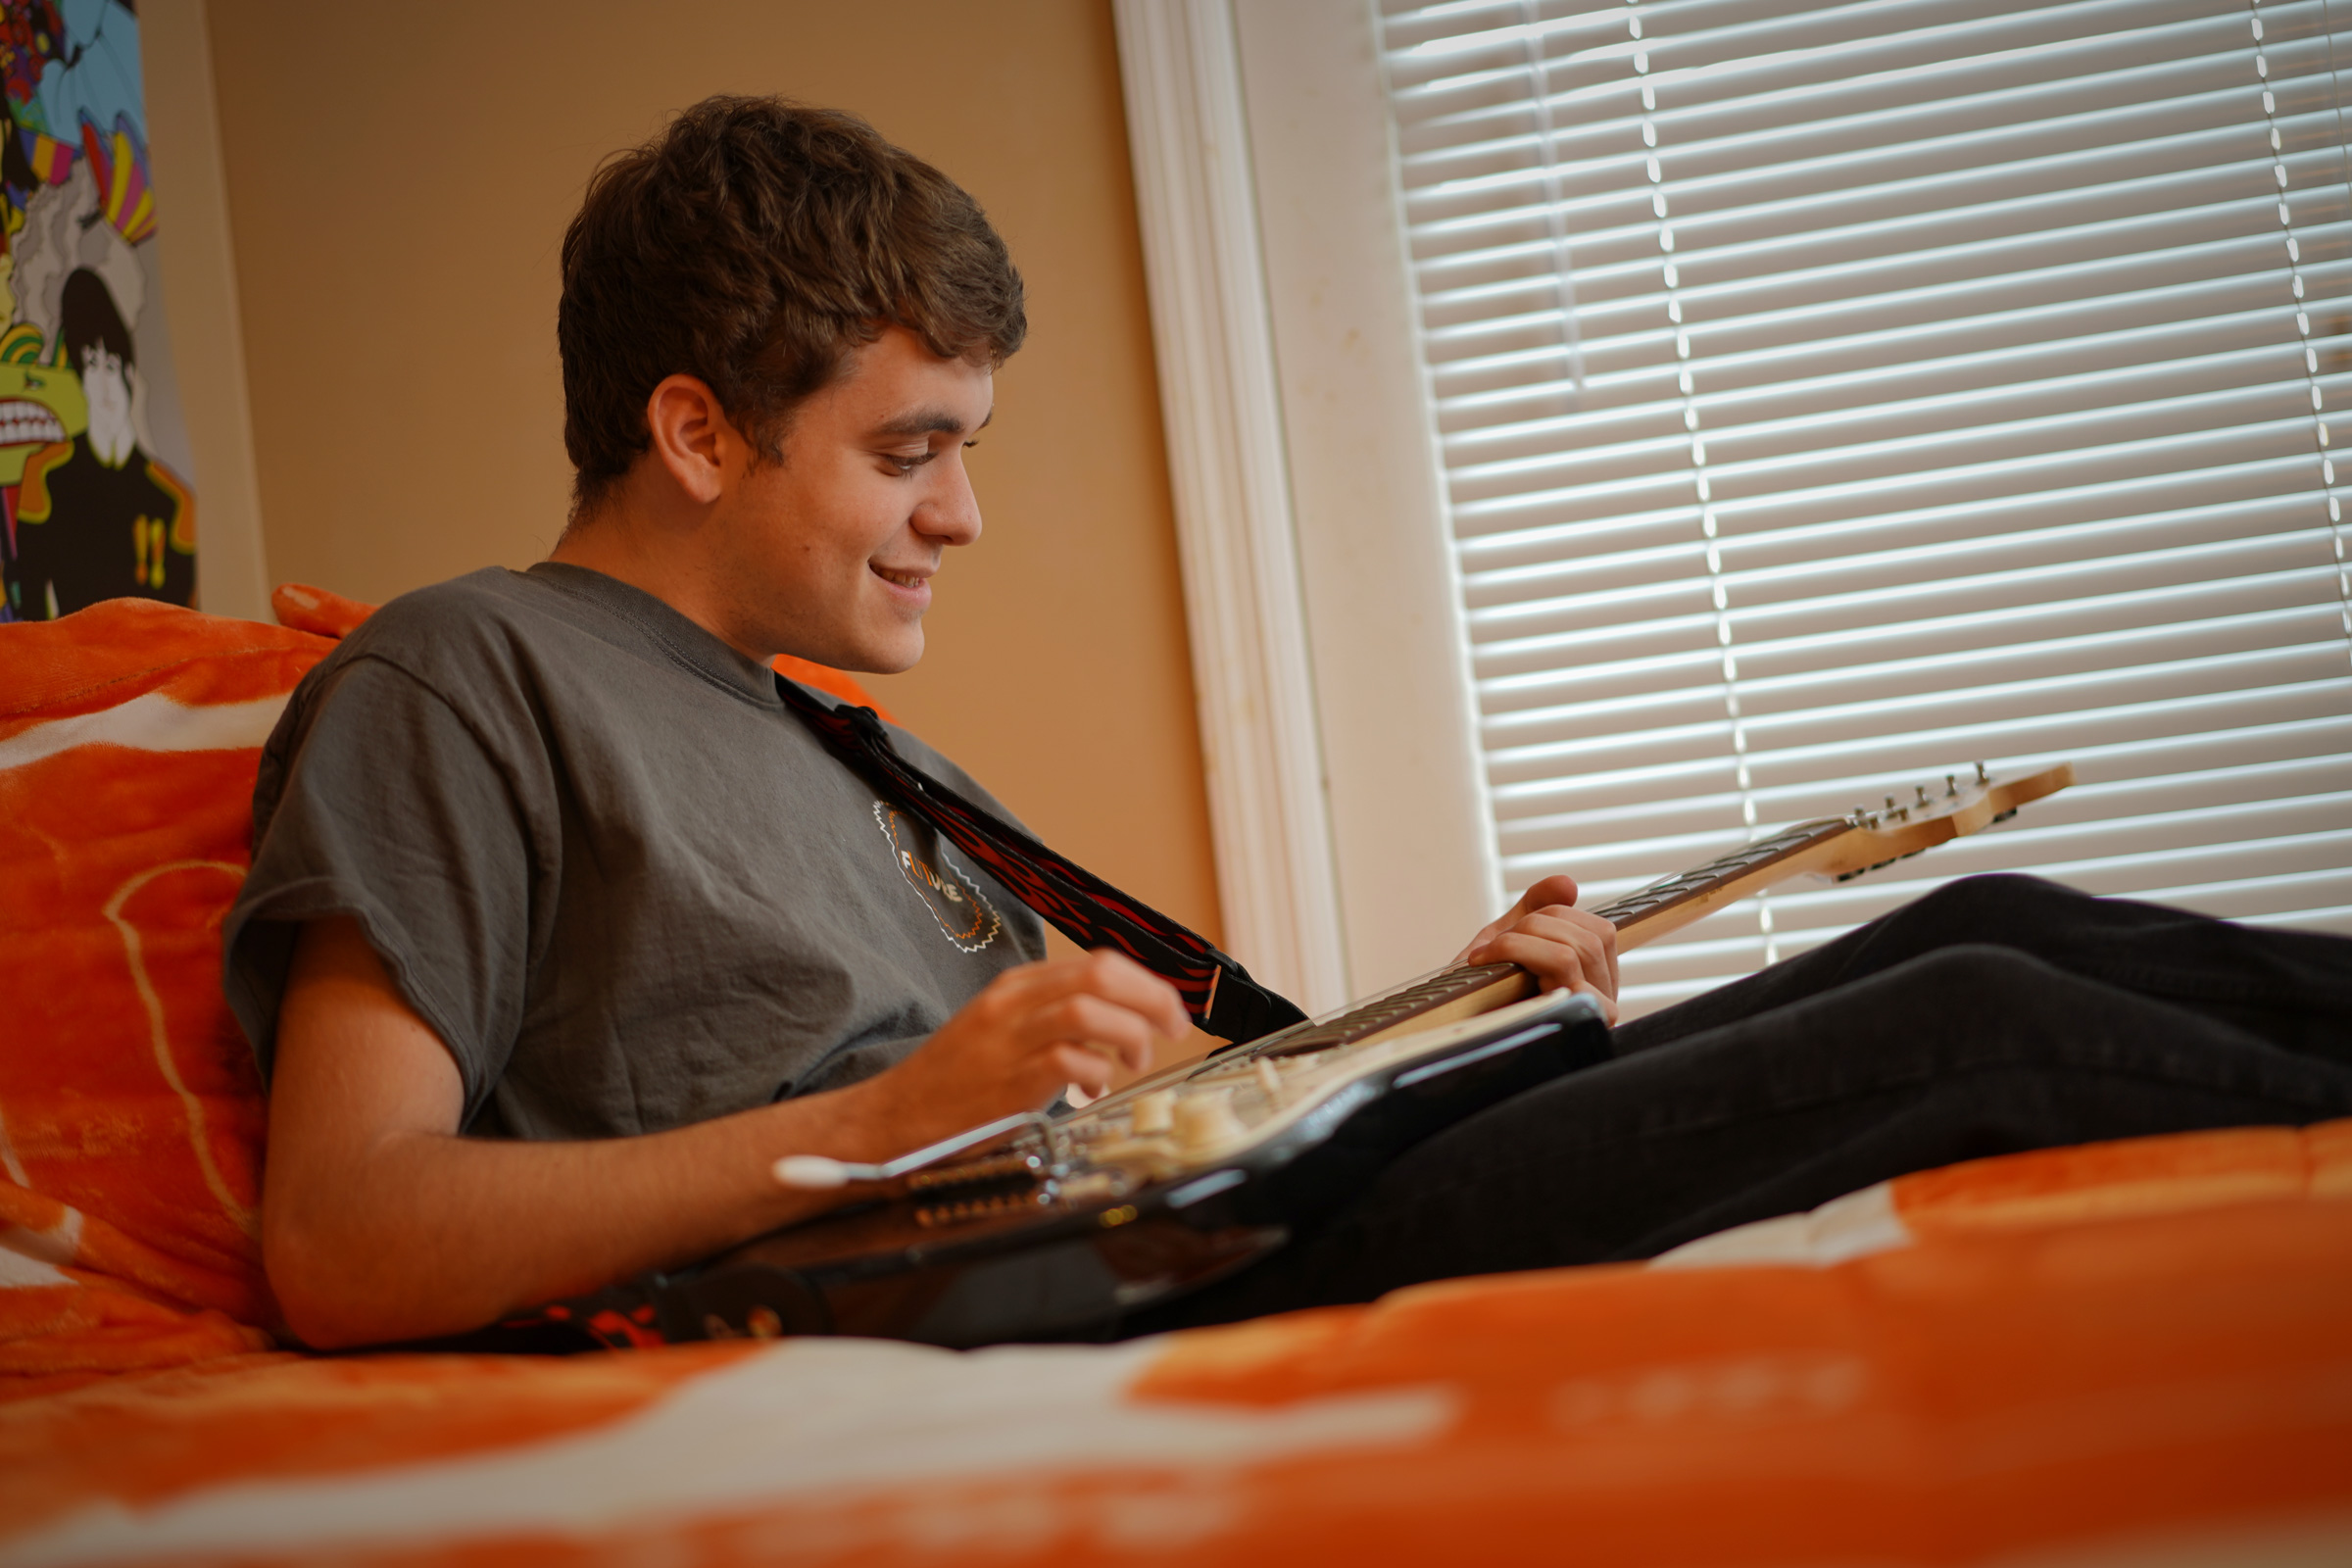 Ben Kredich plays an electric guitar in his bedroom